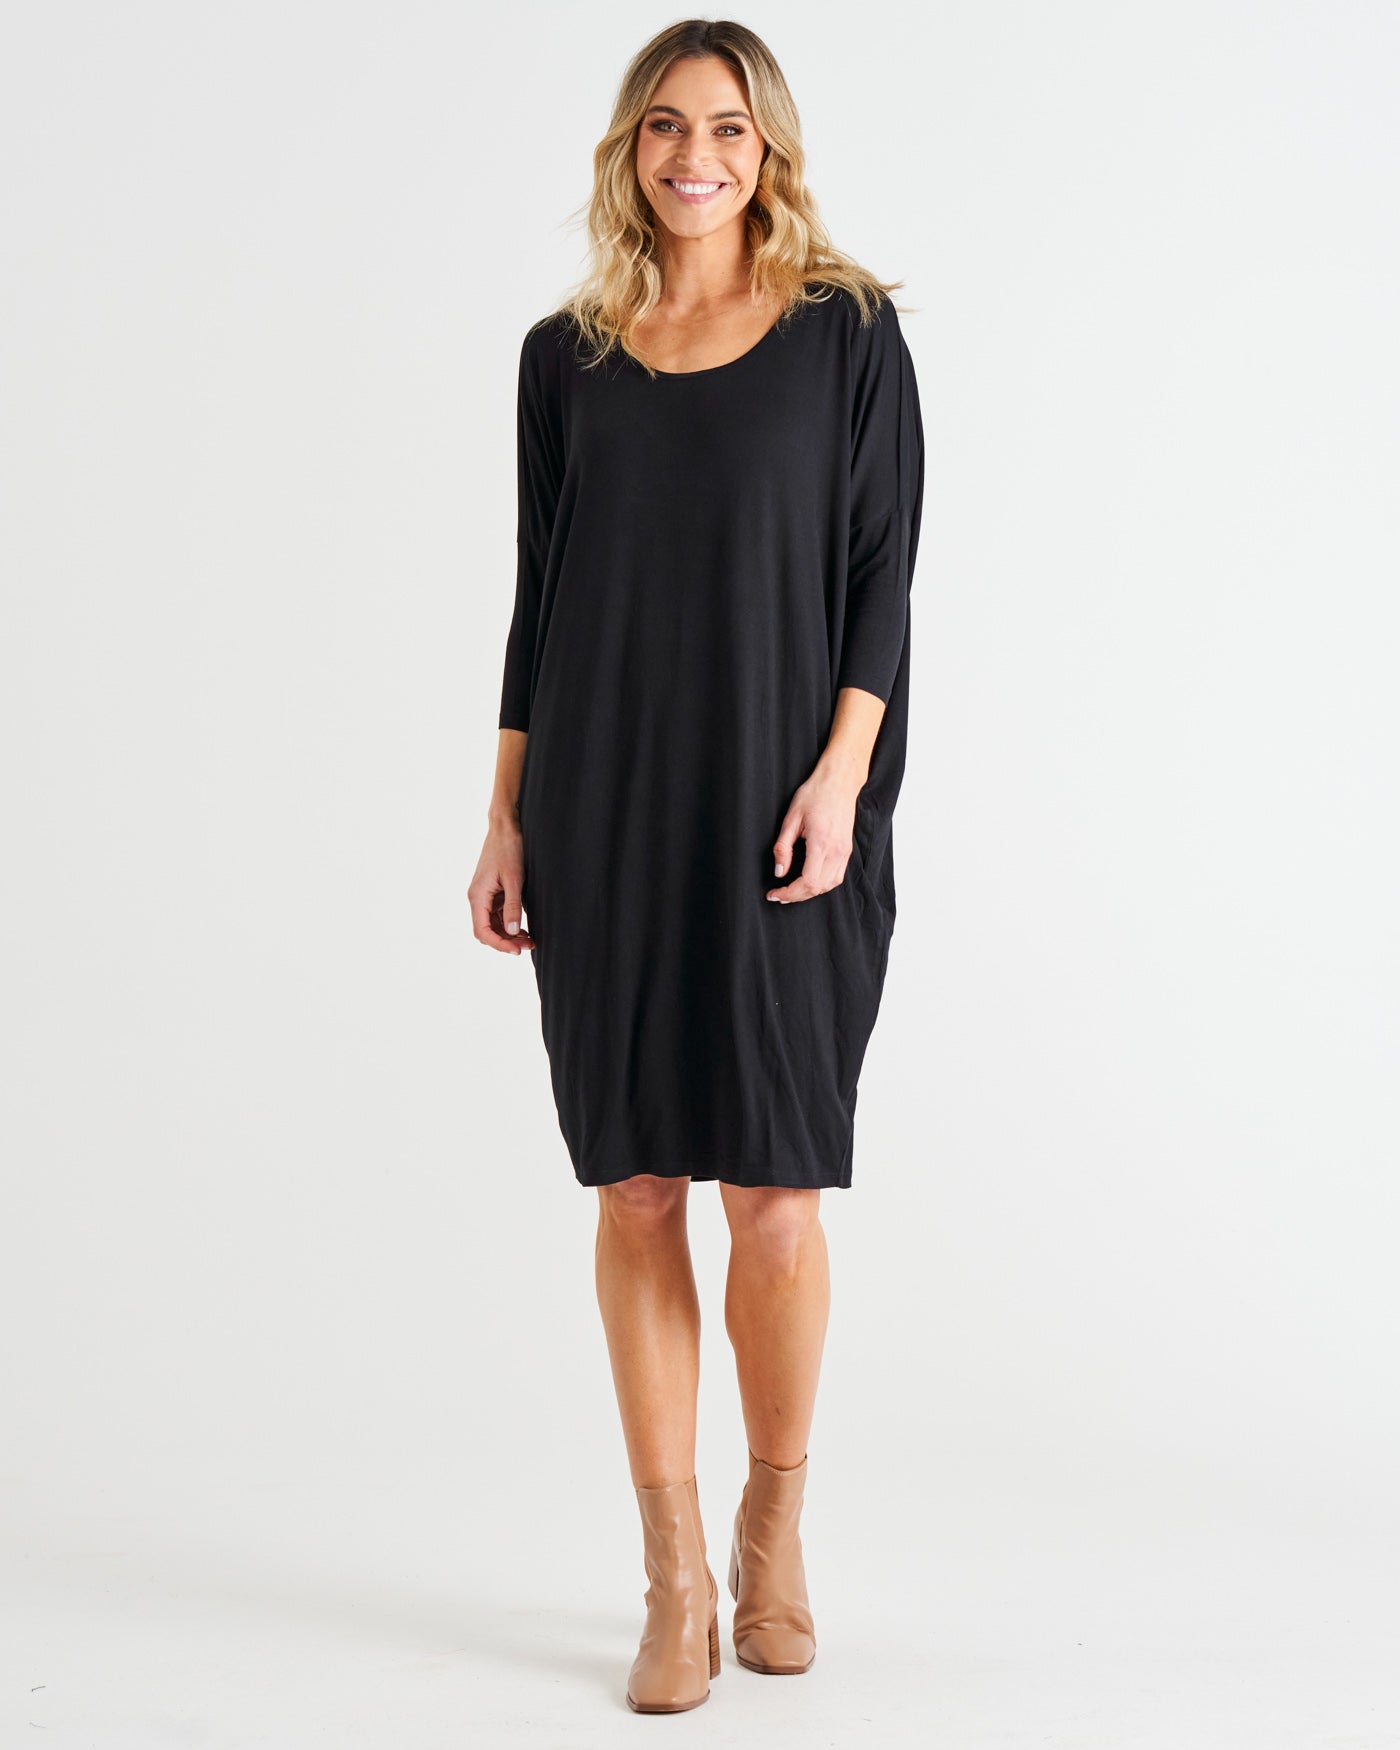 Lucia Stretchy 3/4 Sleeve T-Shirt Dress - Black